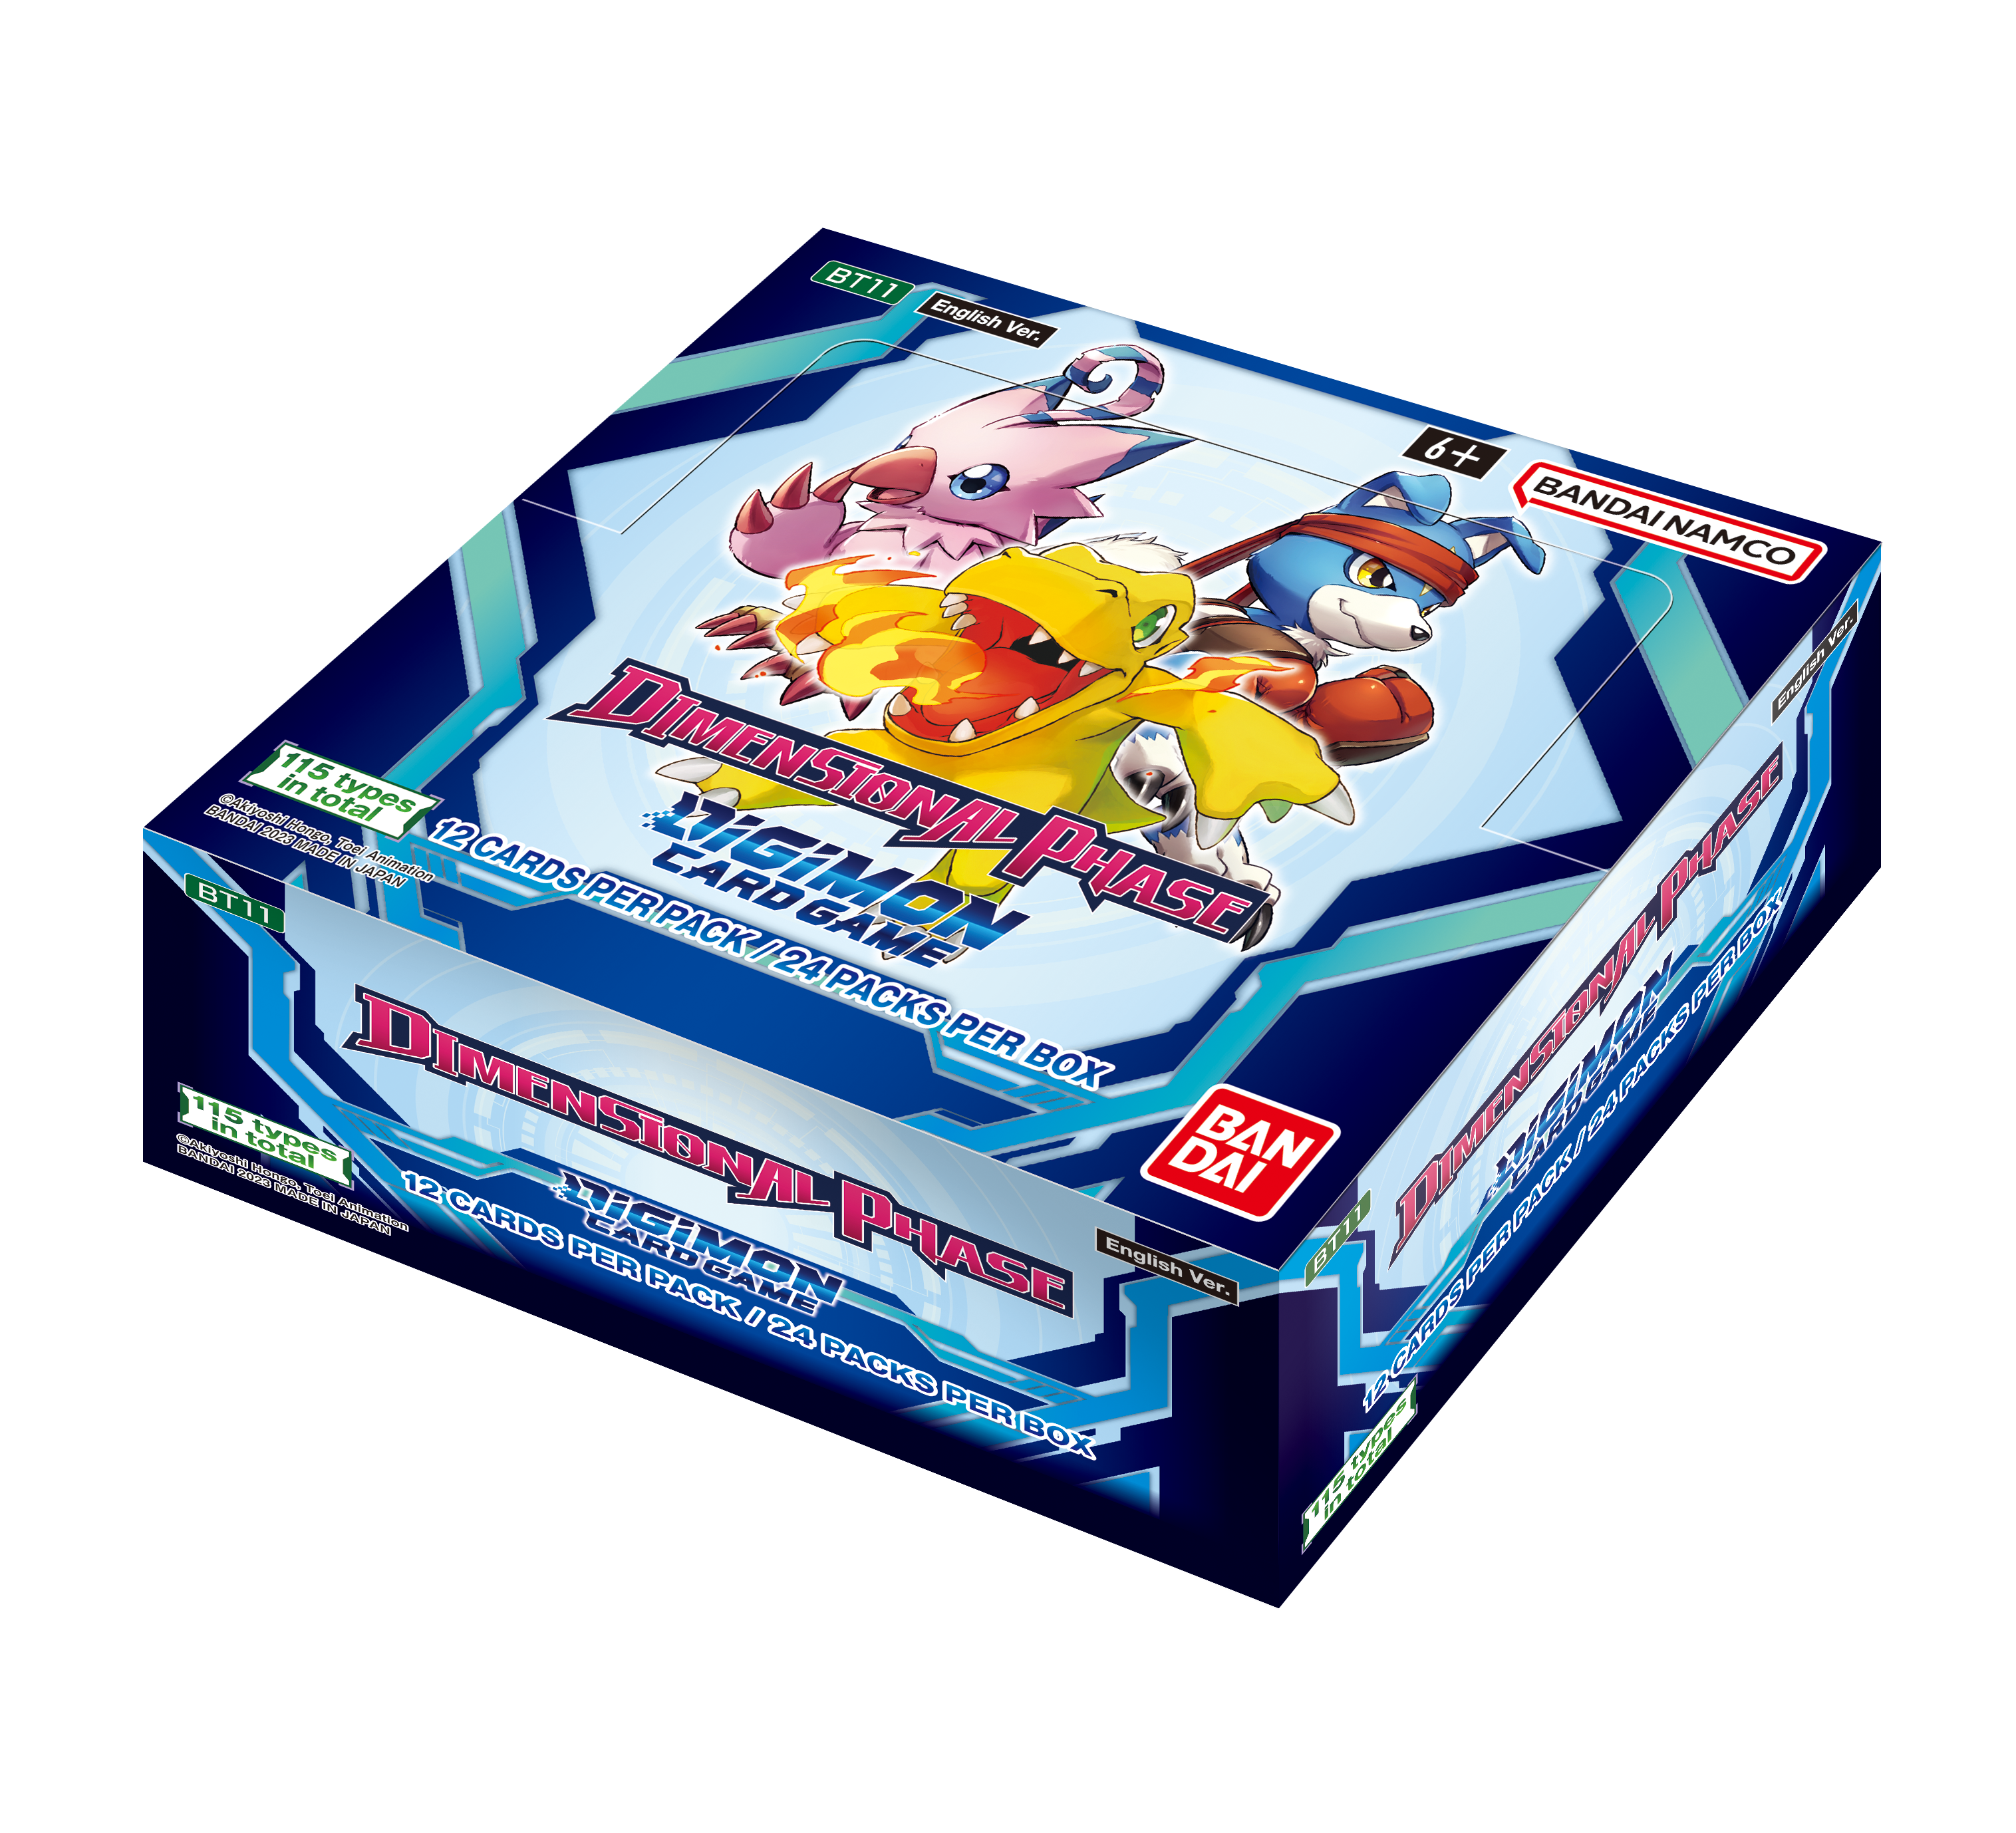 Digimon TCG: Dimensional Phase Booster Box [BT11]